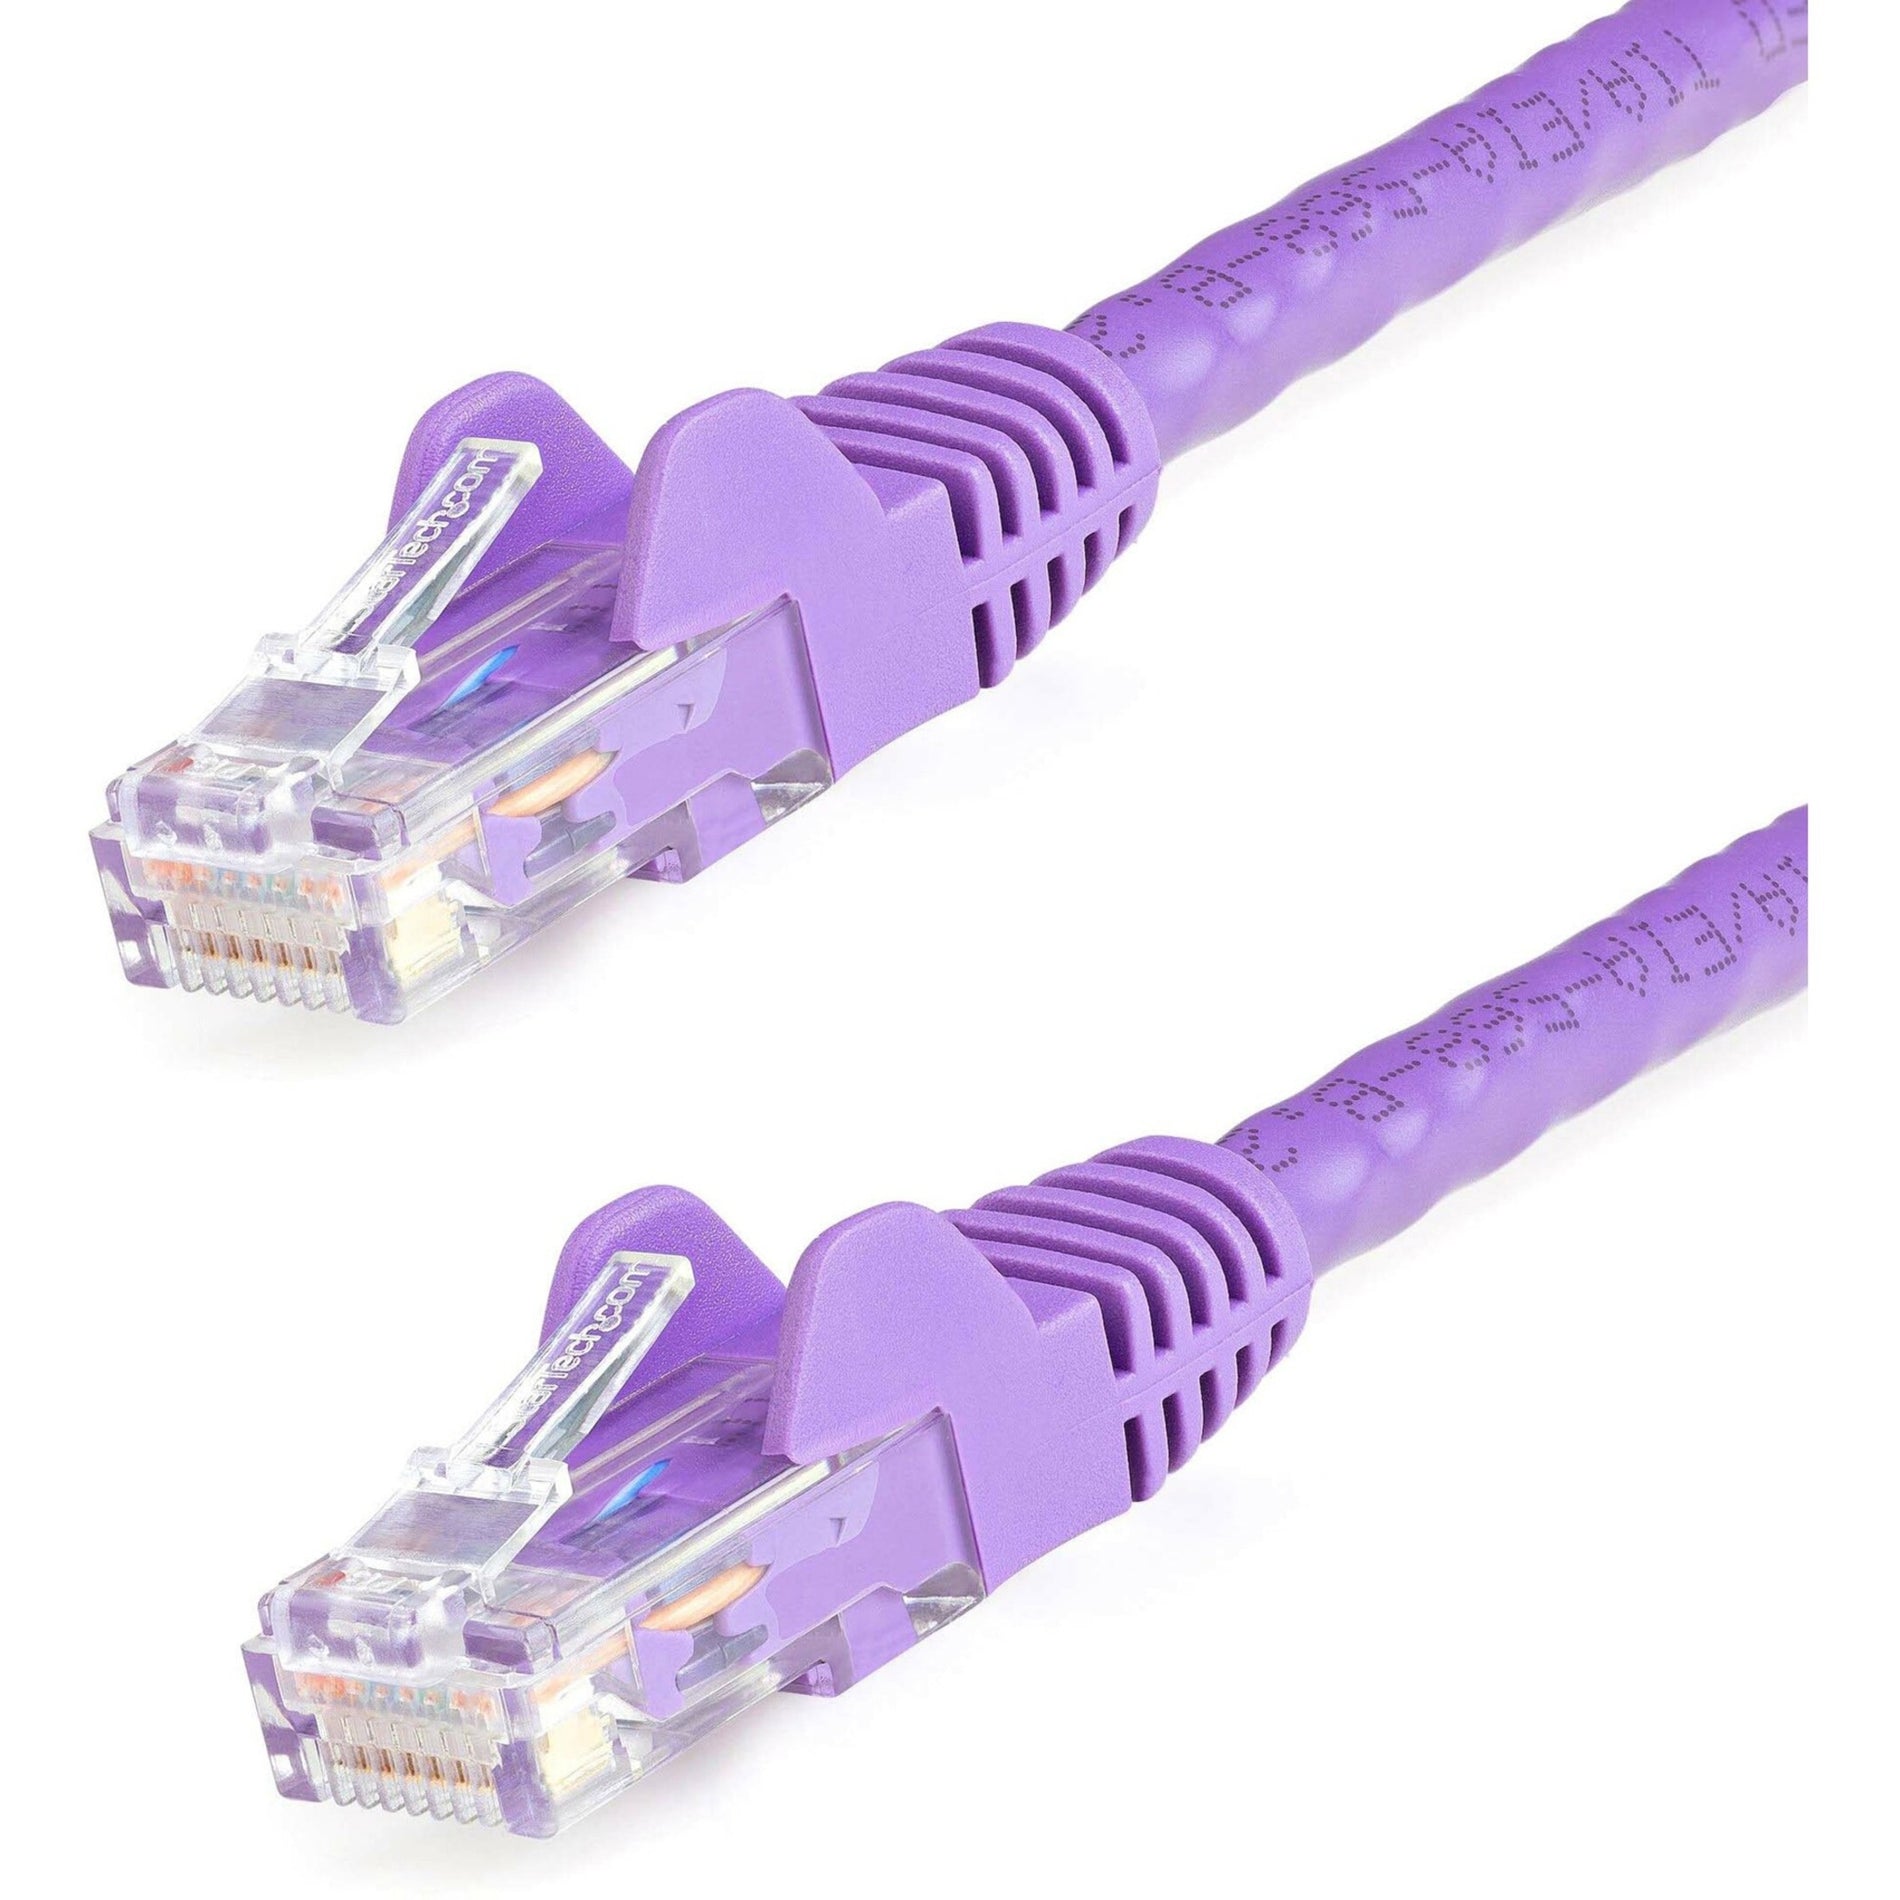 StarTech.com N6PATCH20PL Cat6 Patch Cable, 20ft Purple Ethernet Cable with Snagless RJ45 Connectors